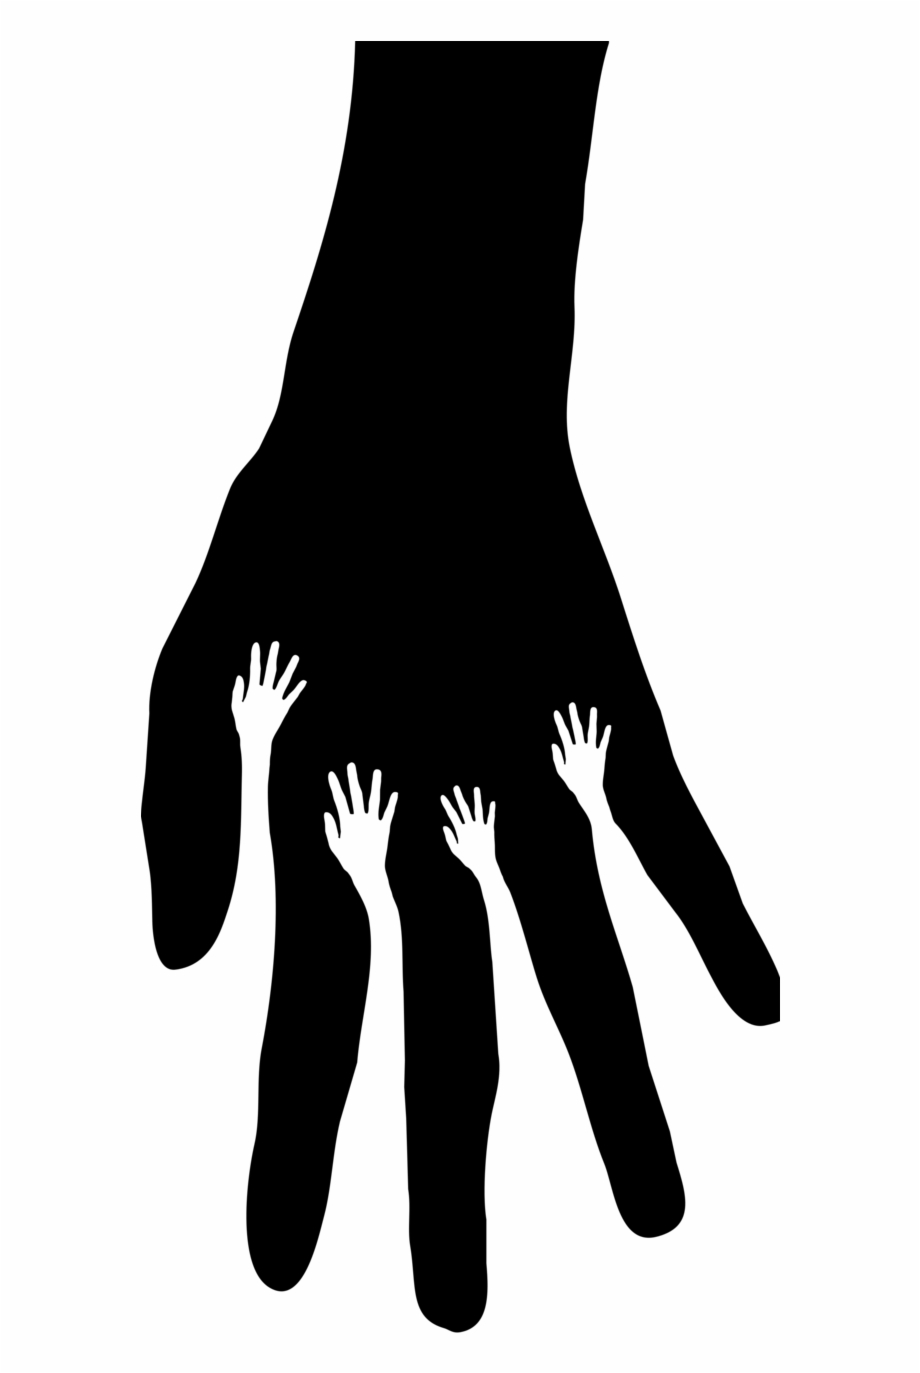 Helping Hand Logo | Hand logo, Helping hands logo, App design inspiration